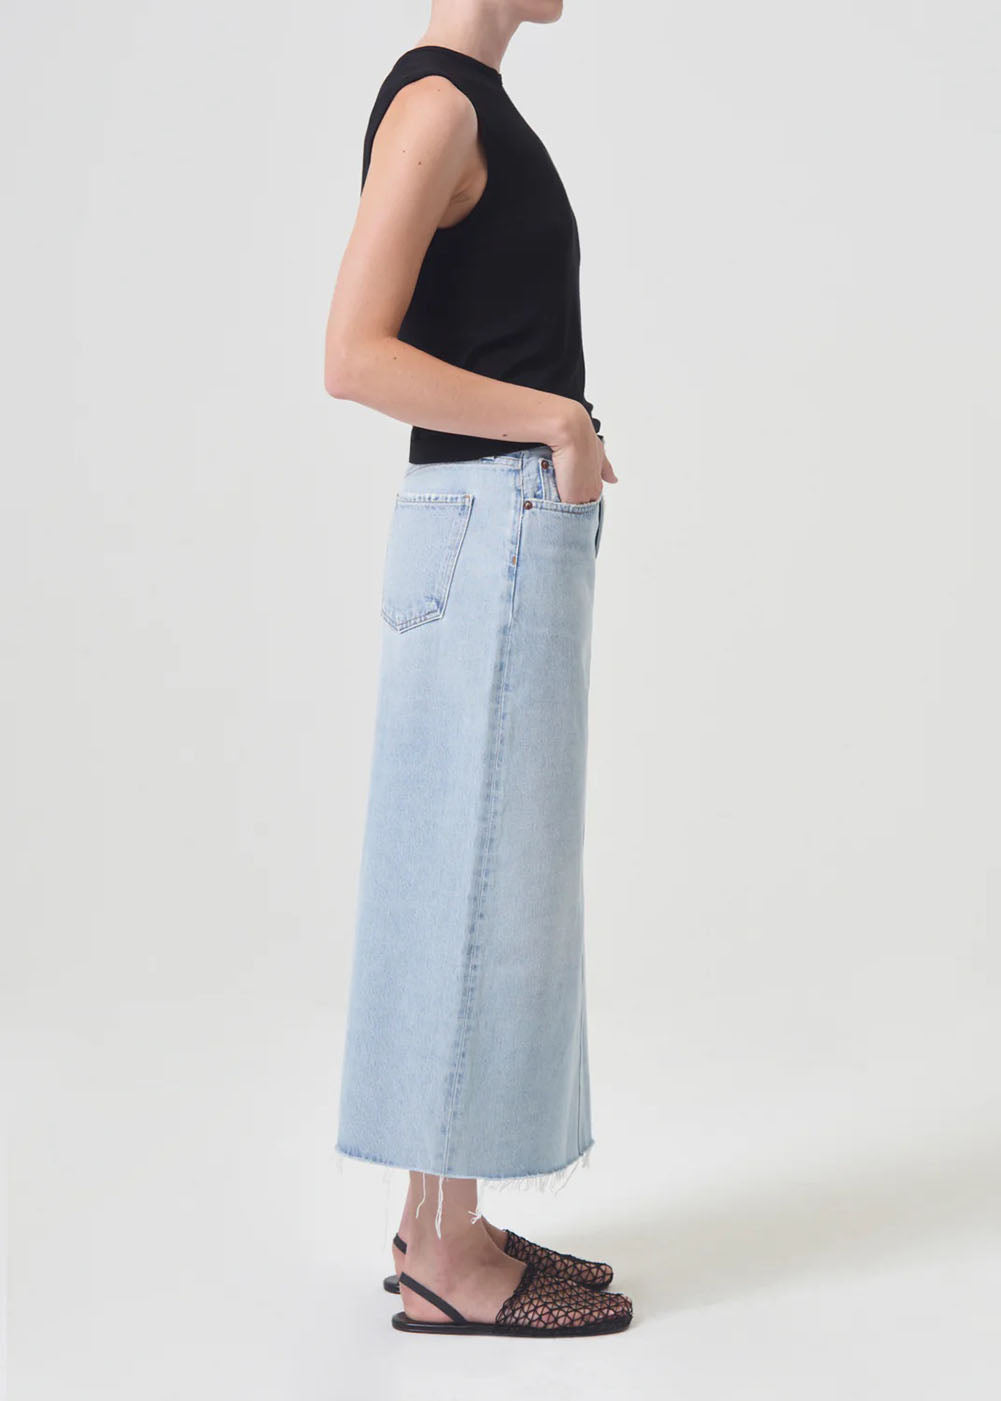 Della Mid Length Denim Skirt - Practice - AGOLDE Canada - Danali - A3056-1141-PRCTC